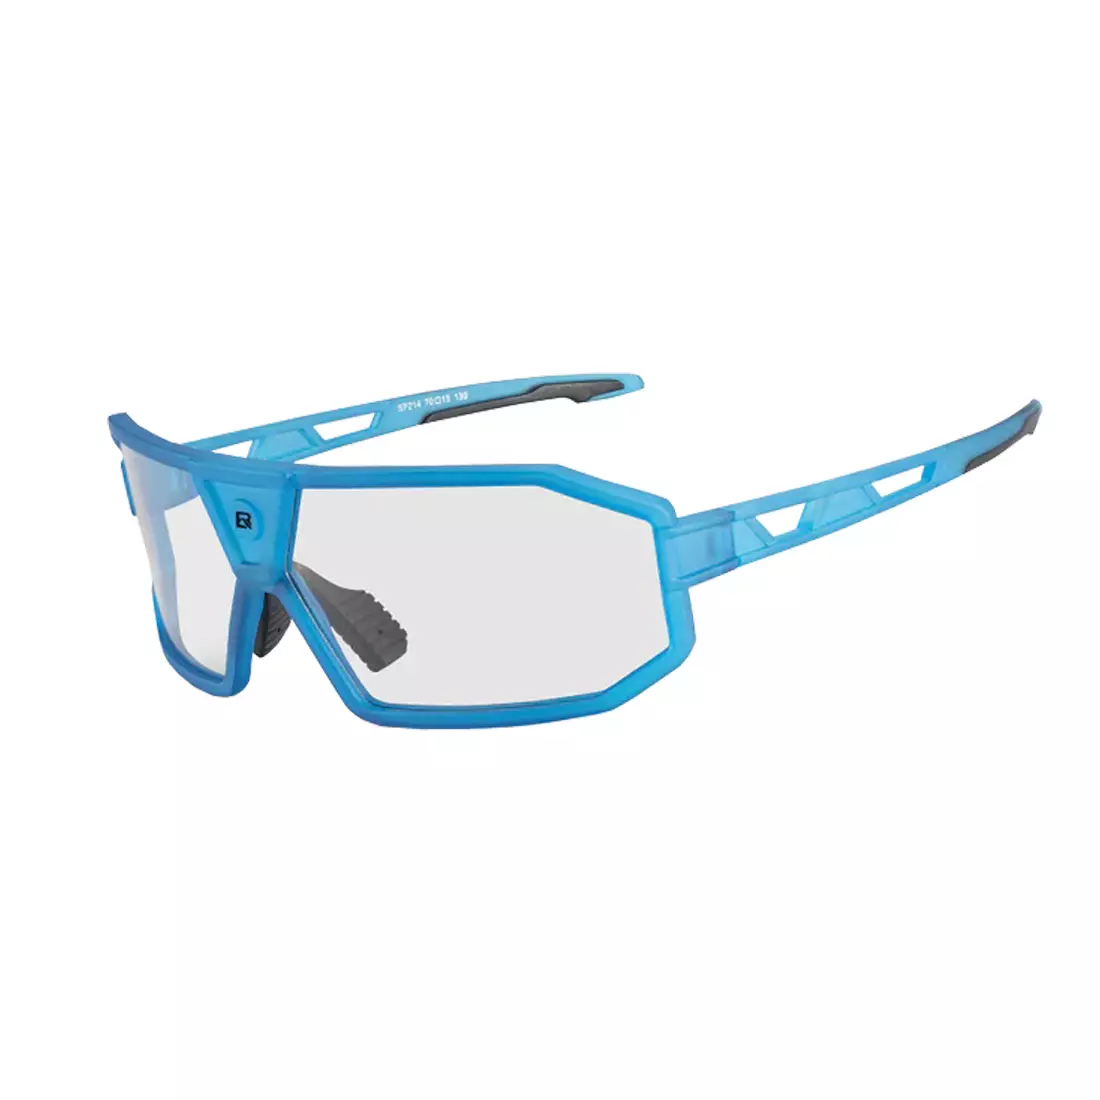 Rockbros SP214BL fotochromatické cyklistické / športové okuliare modré 